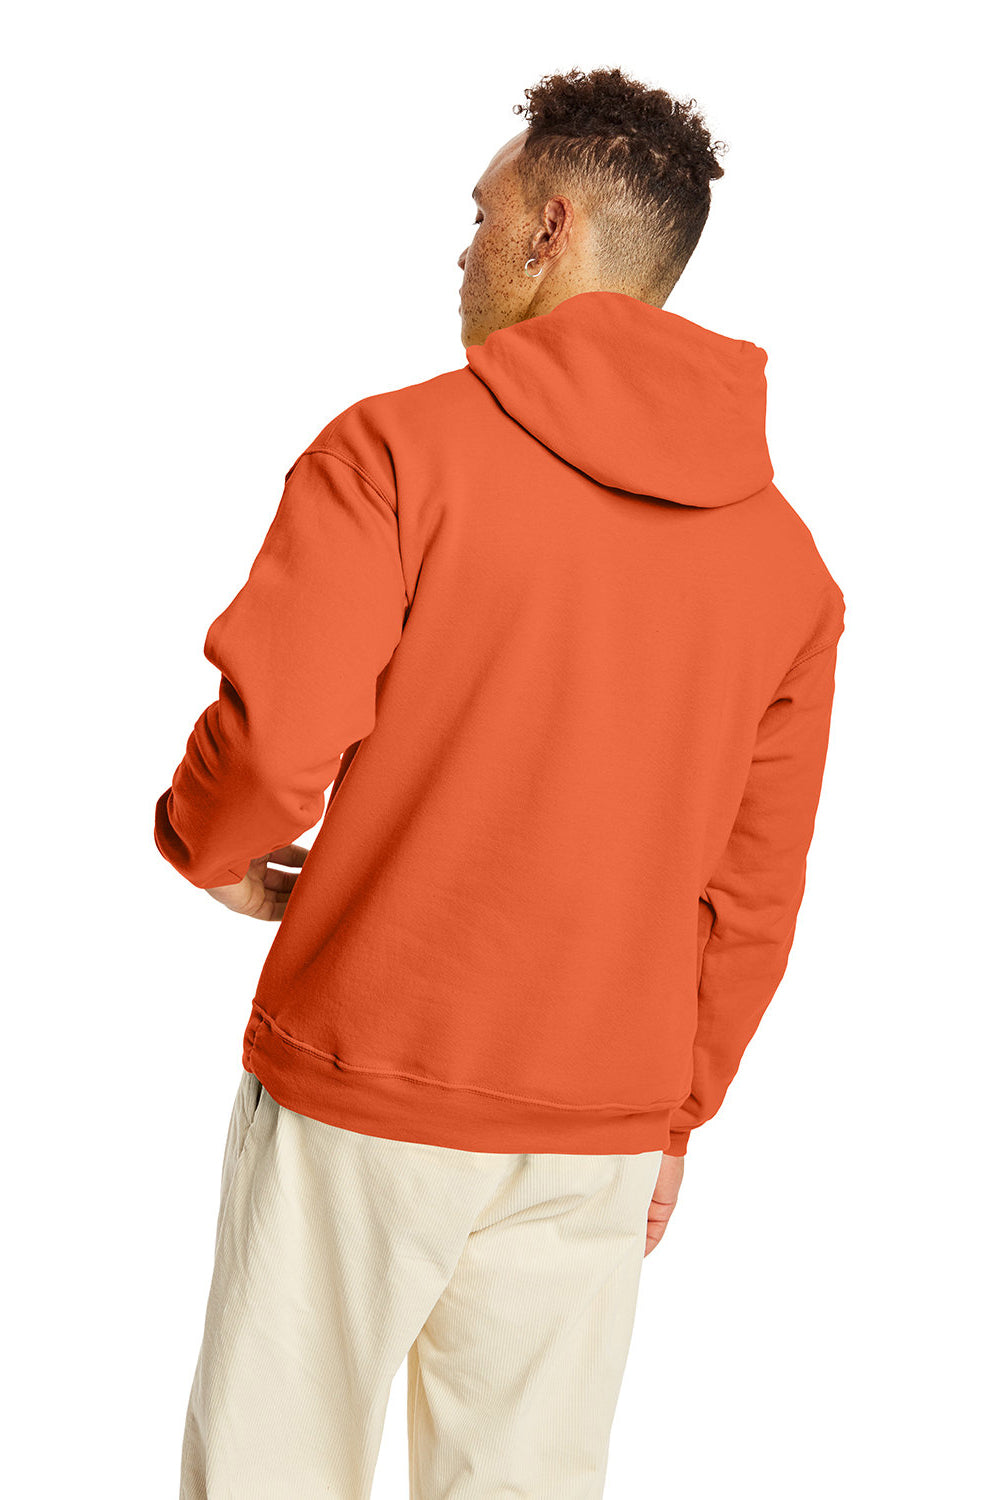 Hanes P170 Mens EcoSmart Print Pro XP Hooded Sweatshirt Hoodie Texas Orange Back